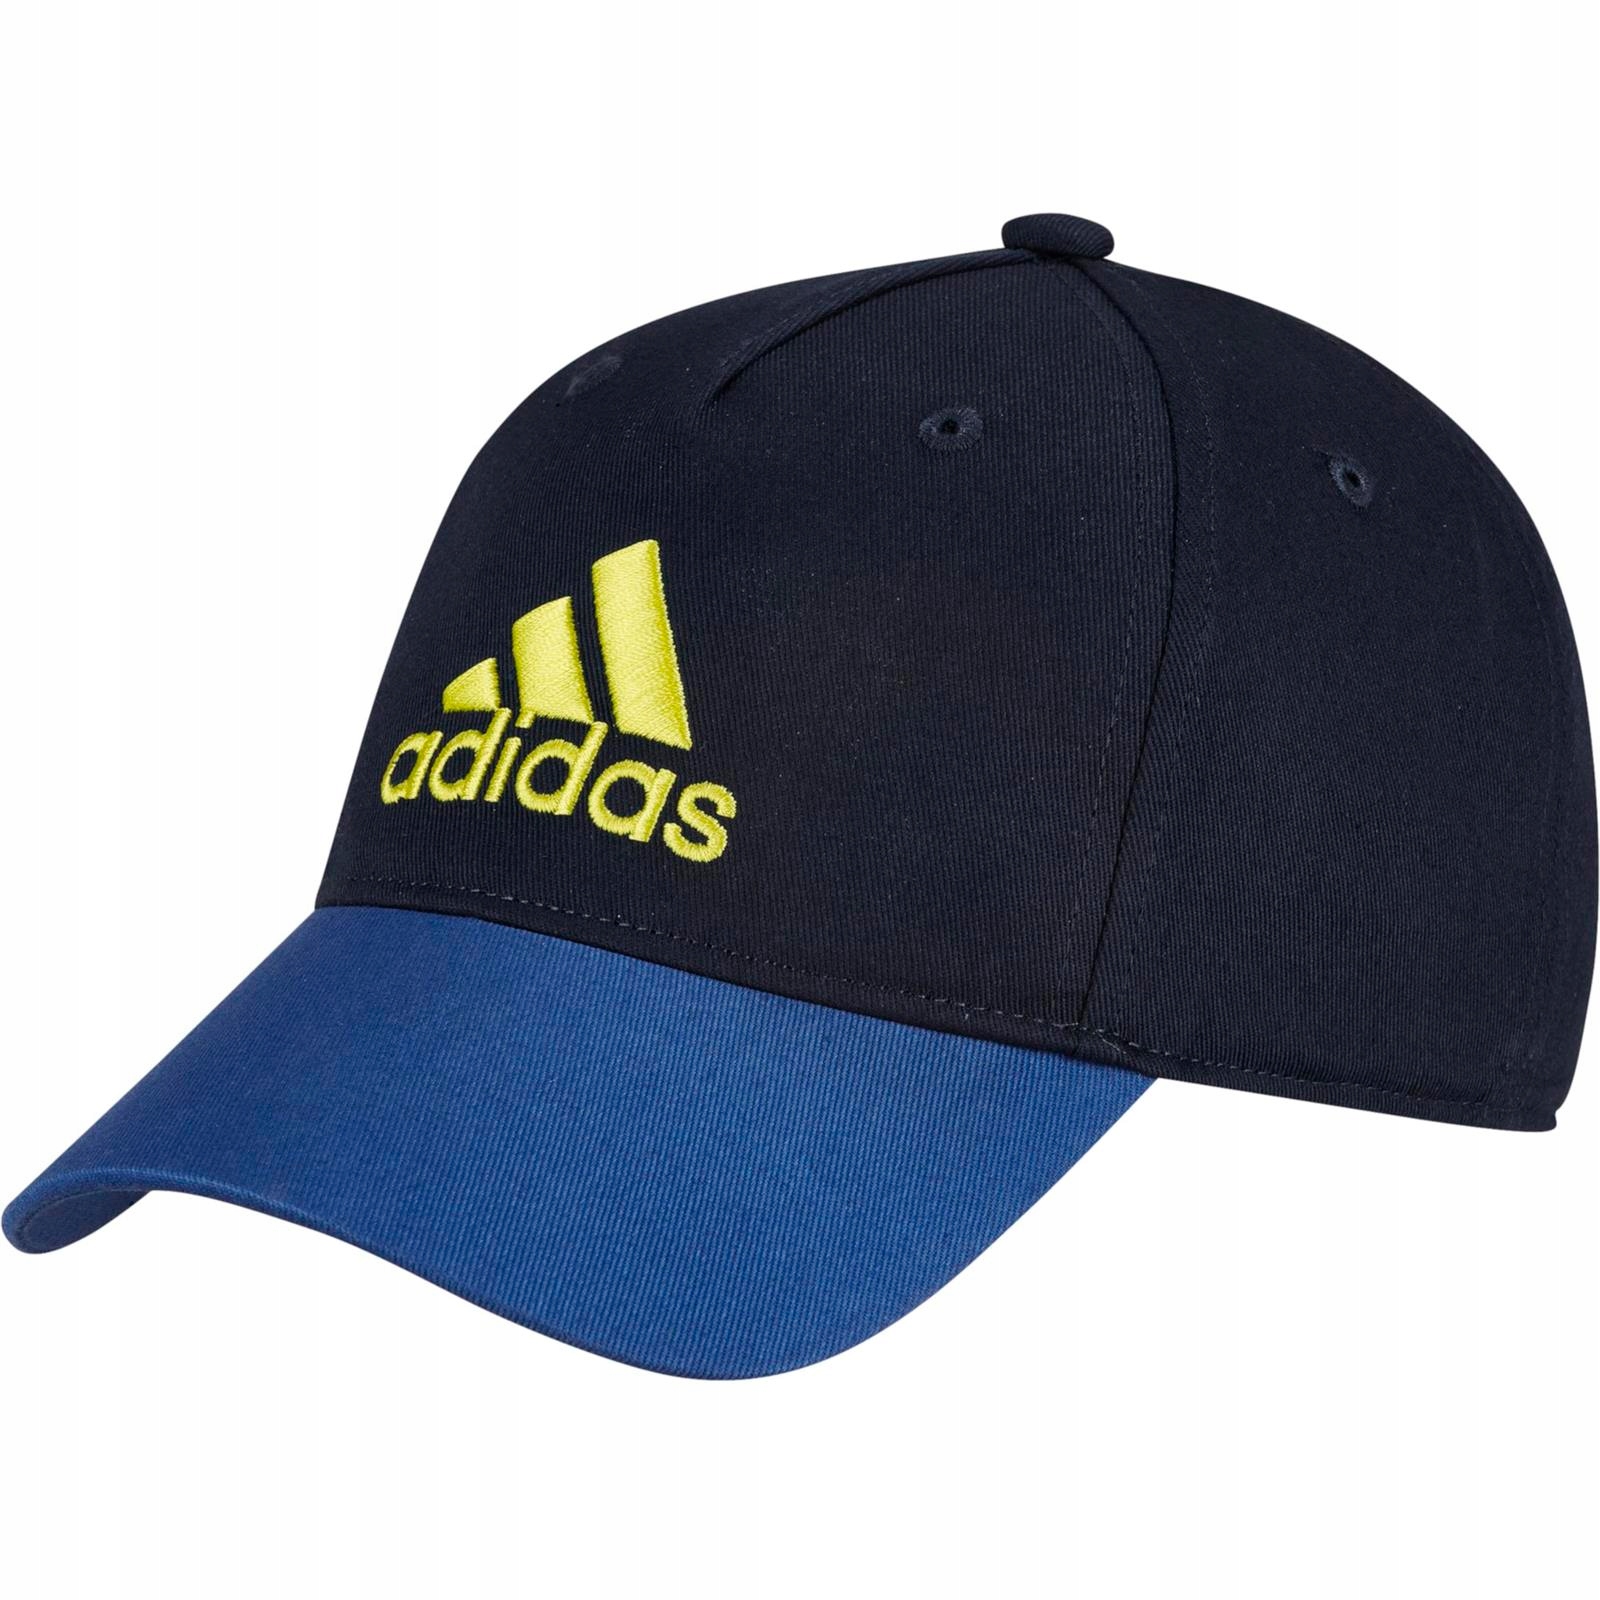 Adidas LK graphic cap. Адидас бейсболки детские. Кепка адидас ребенка. Малыш в кепке адидас.